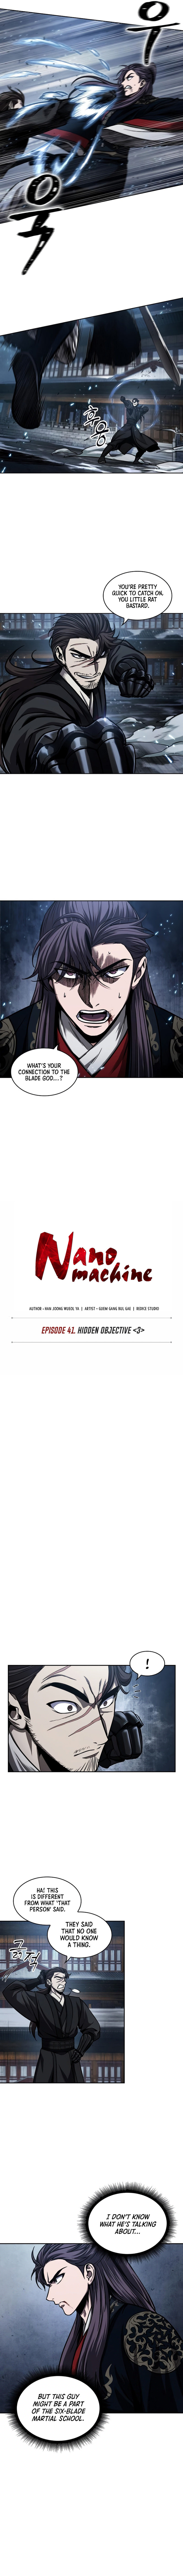 Nano Machine - Chapter 110 Page 3